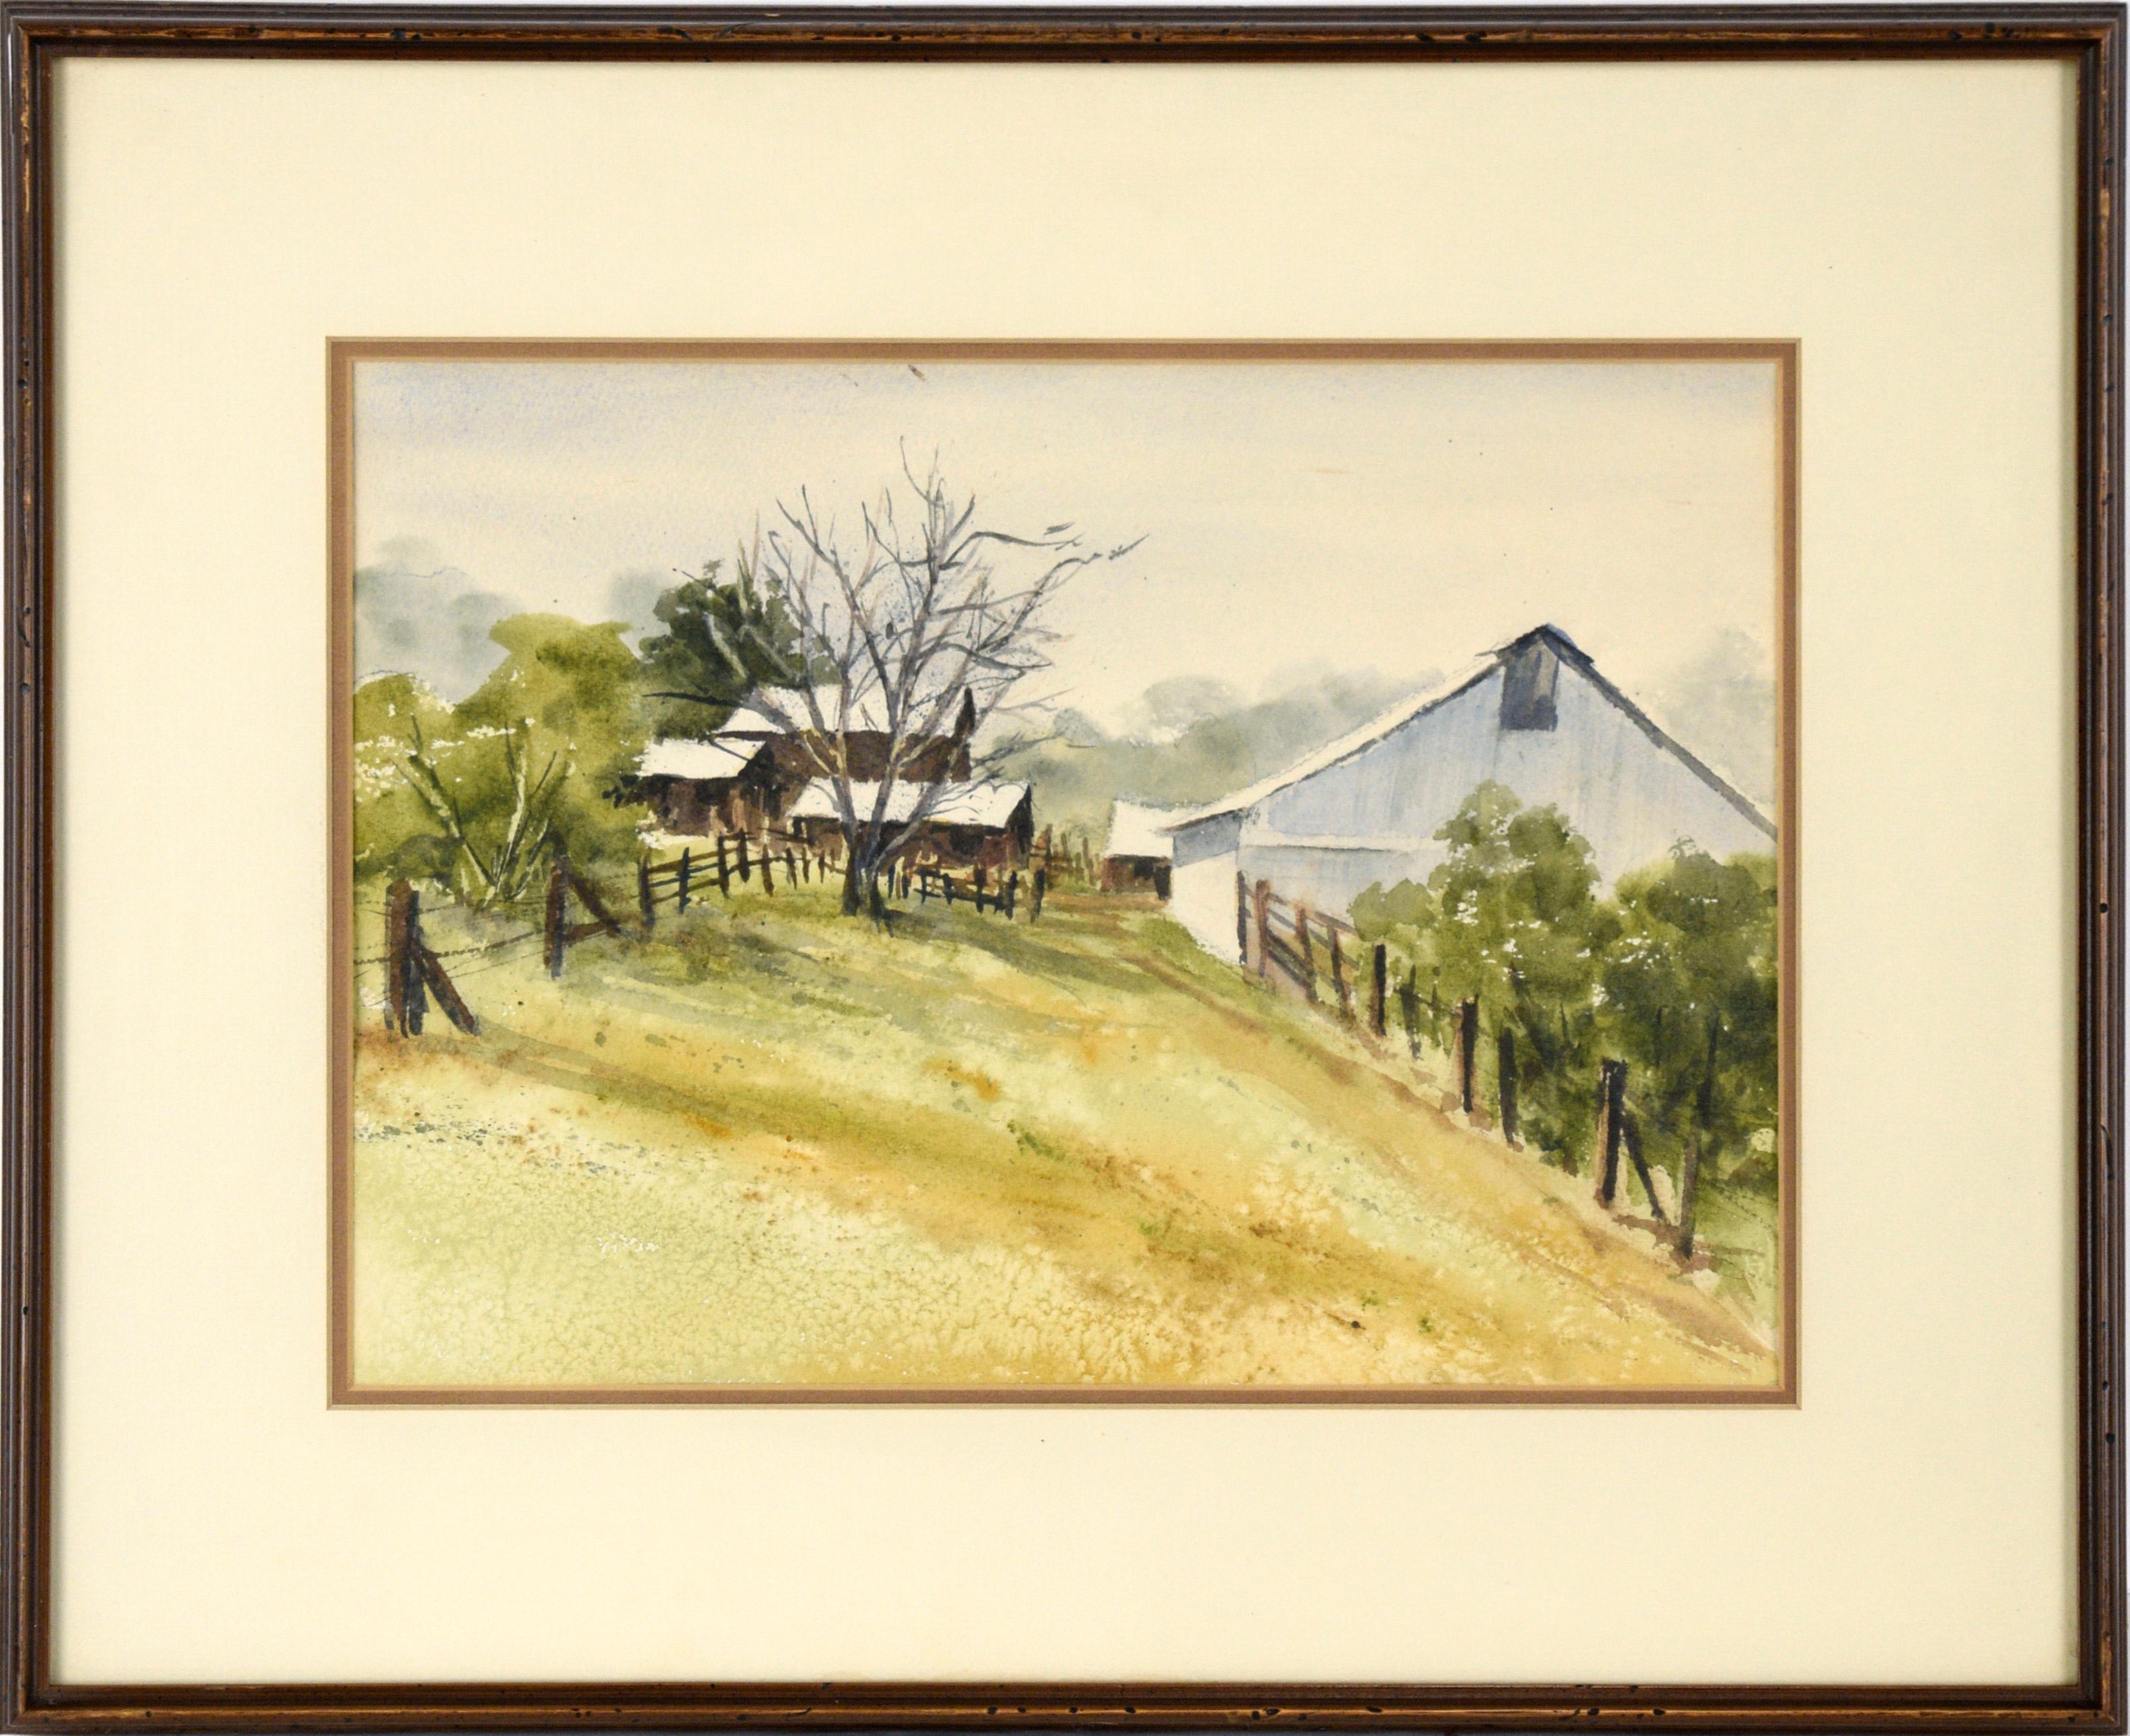 Alice Duke Landscape Art - Grey Barn and Brown House - Rural California Landscape in Watercolor on Paper